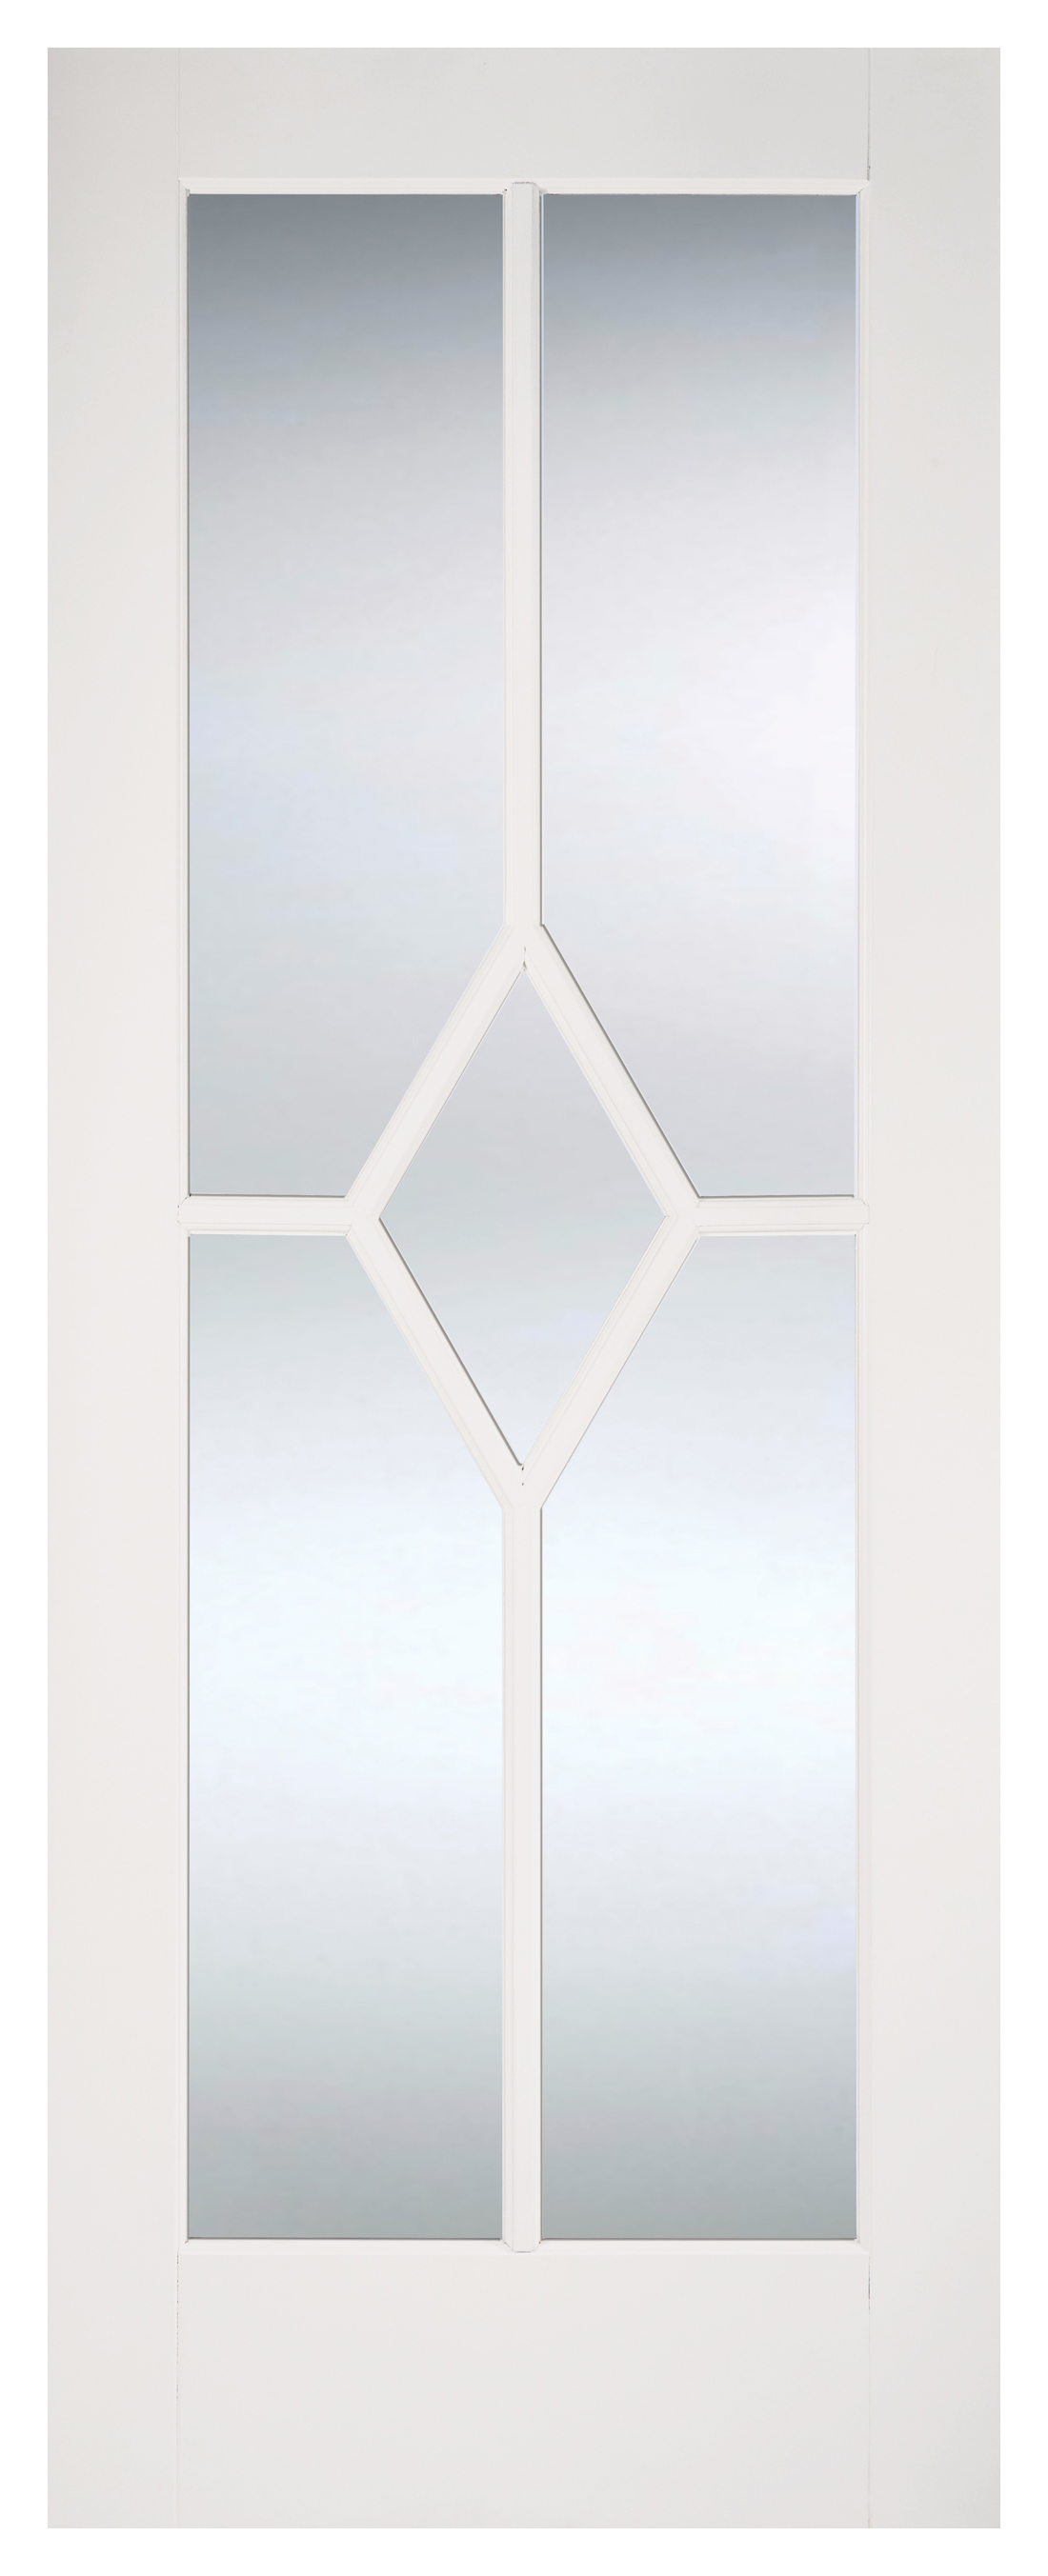 LPD Internal Reims Clear Glazed Primed White Door - 1981mm